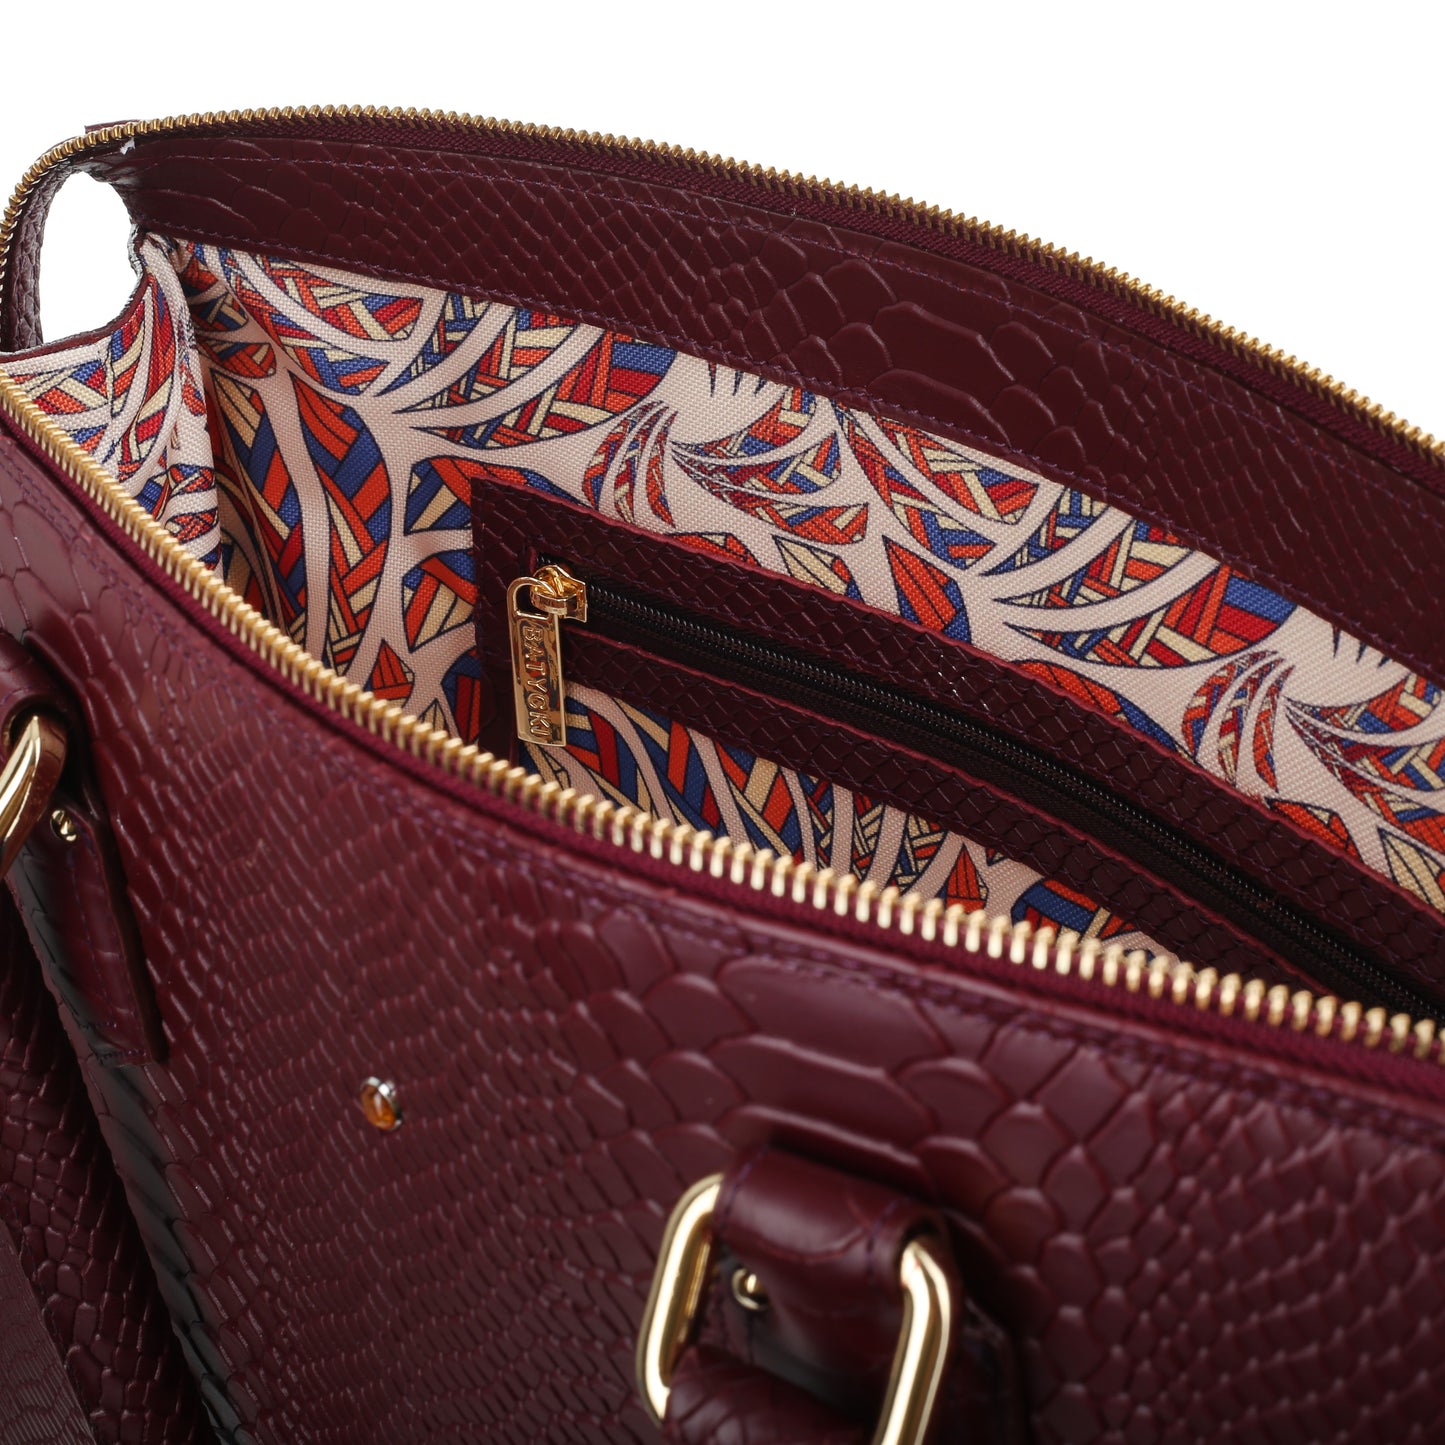 HANA CLARET women's leather briefcase